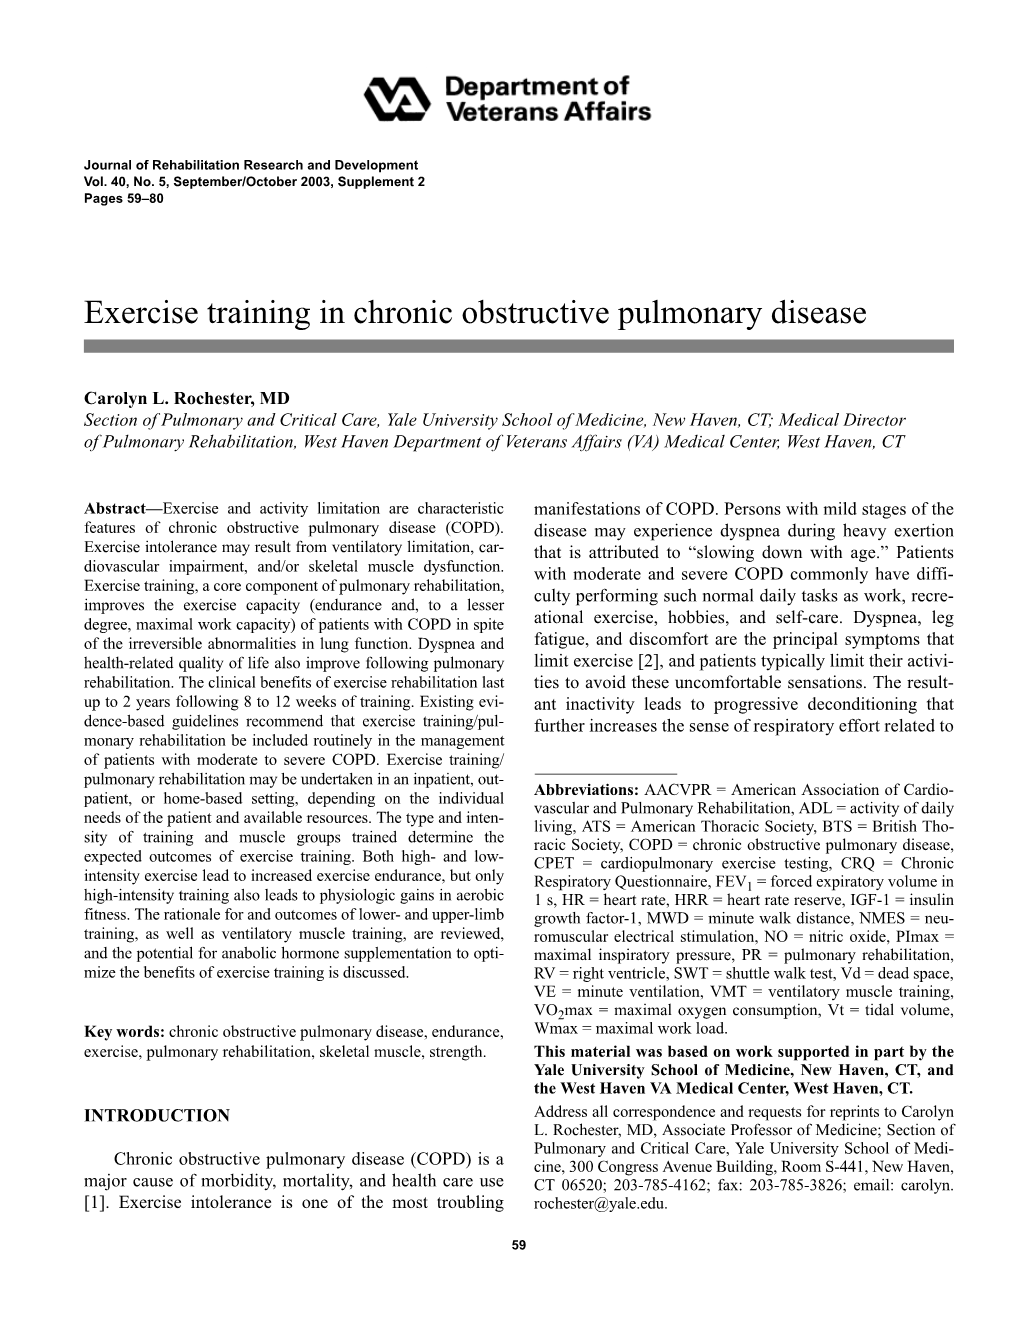 Exercise Training in Chronic Obstructive Pulmonary Disease